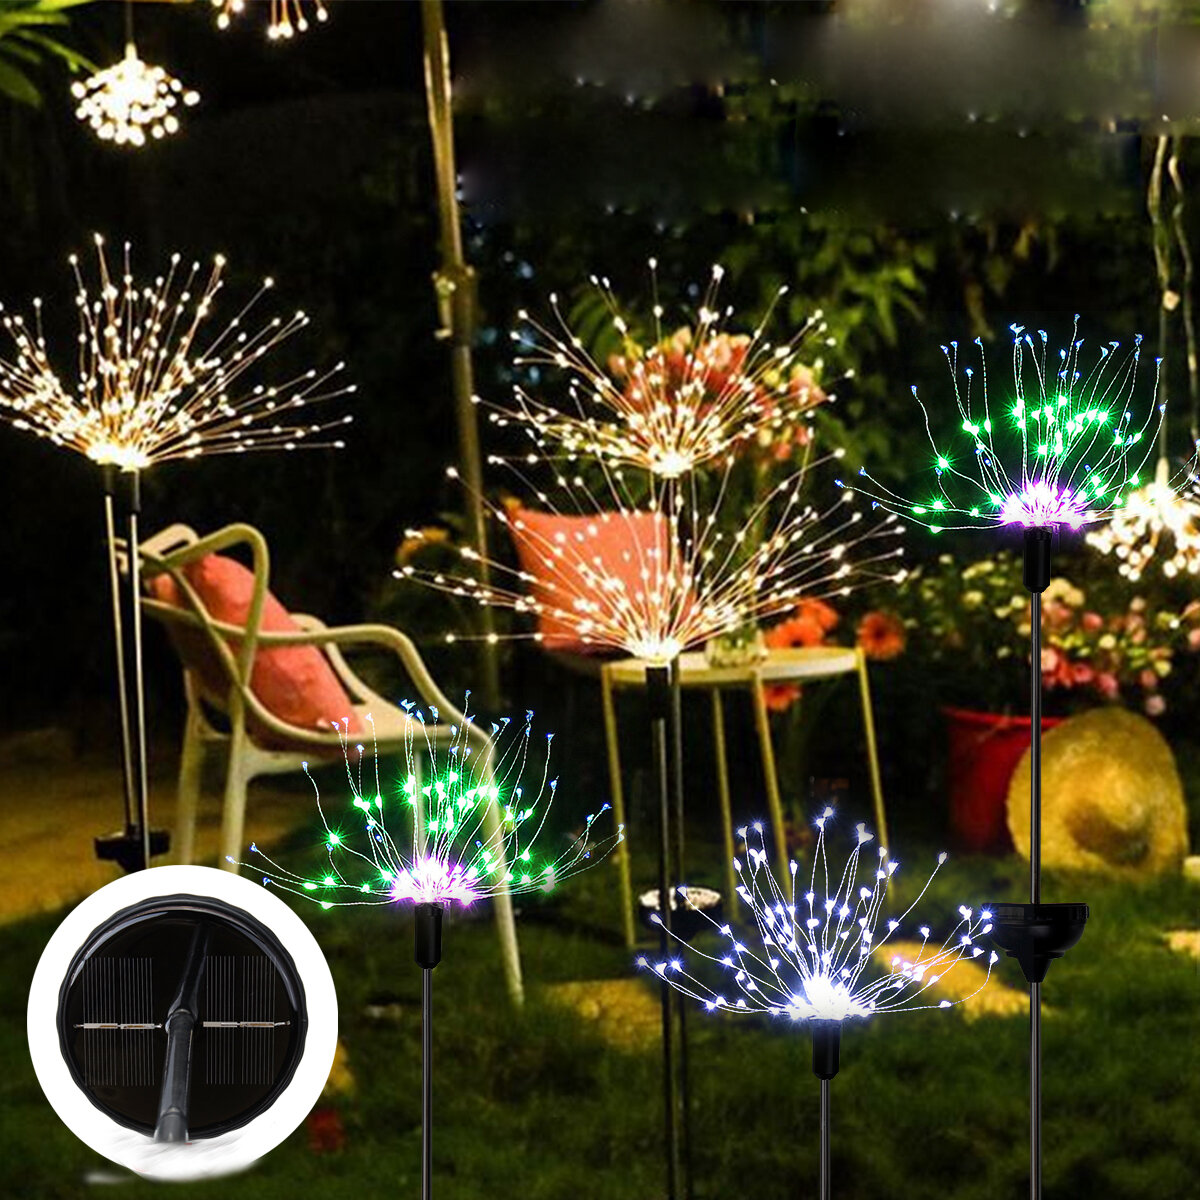 Outdoor Solar LED Firework Lights 90/120/150LED Waterproof Garden Pathway Xmas